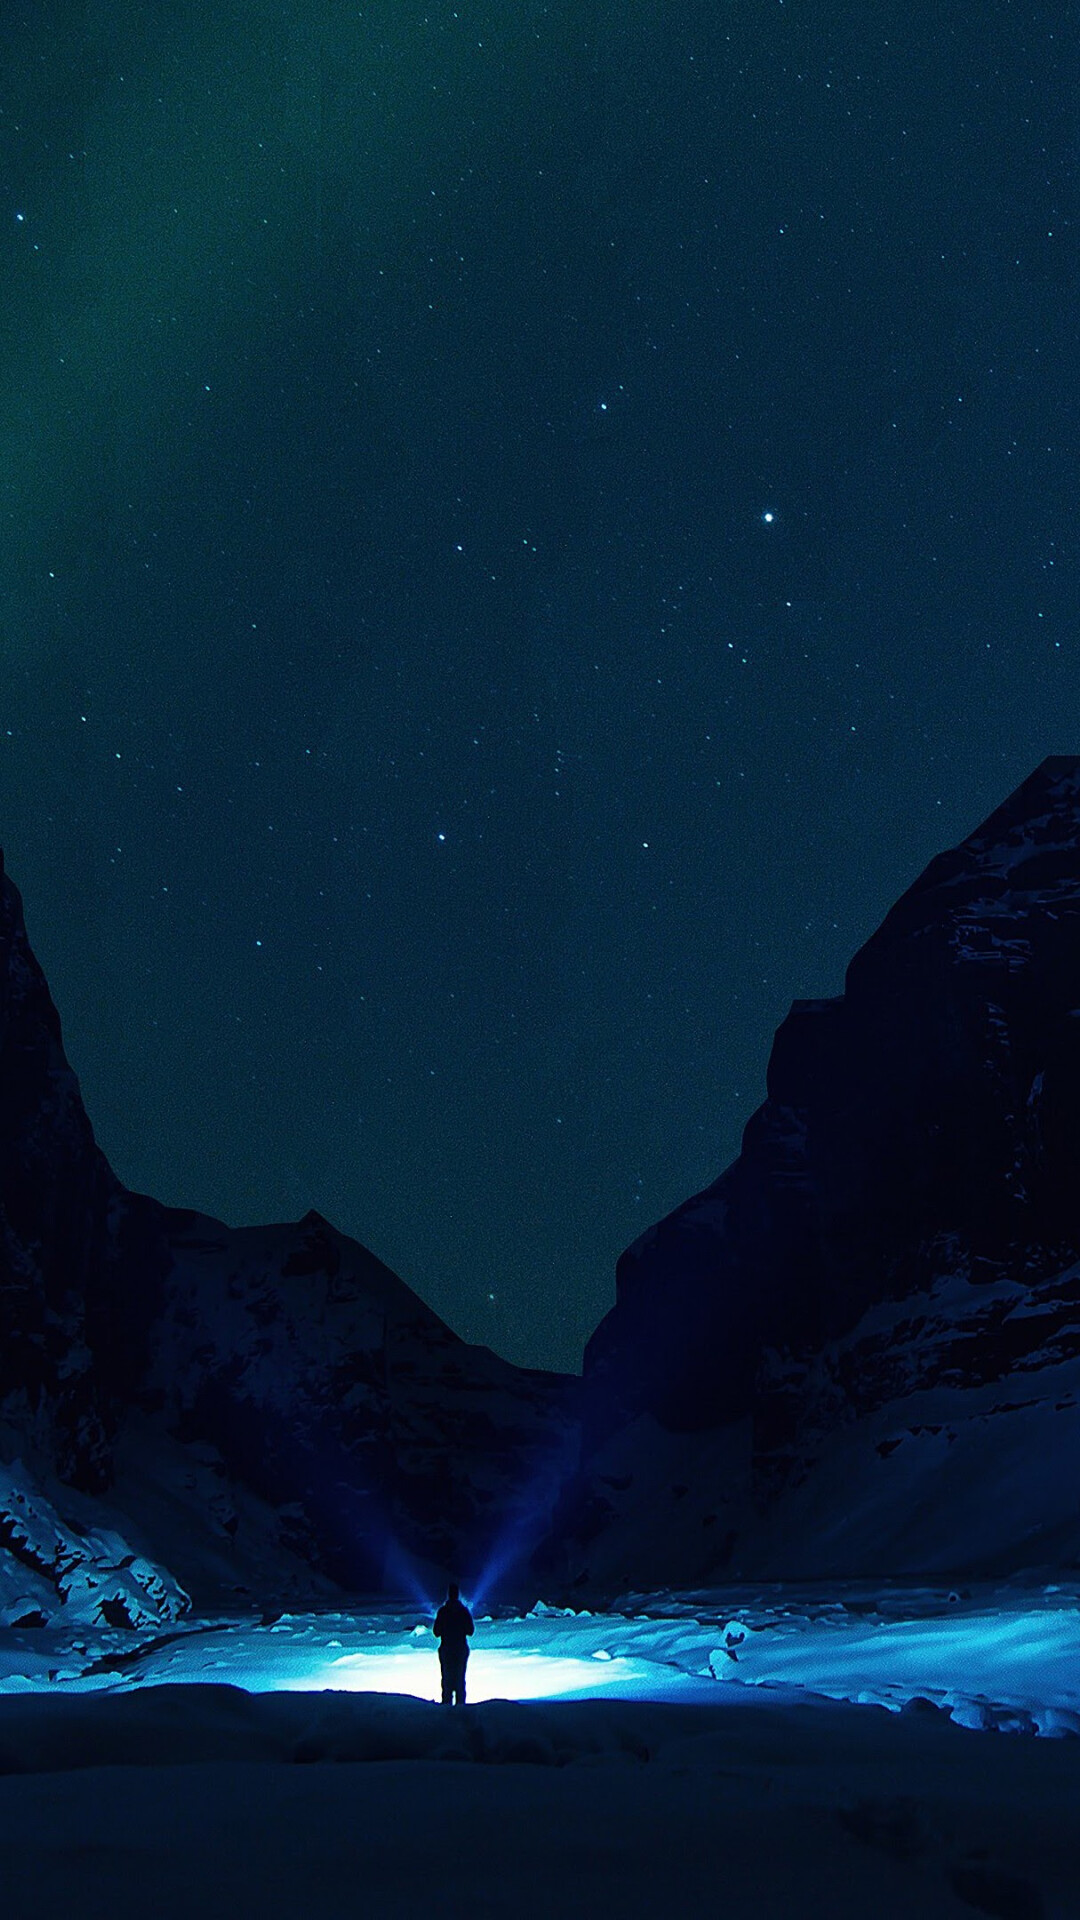 Glacier: Mountain, Nature, Night sky, Scenery, Massive body of slowly moving ice. 1080x1920 Full HD Background.